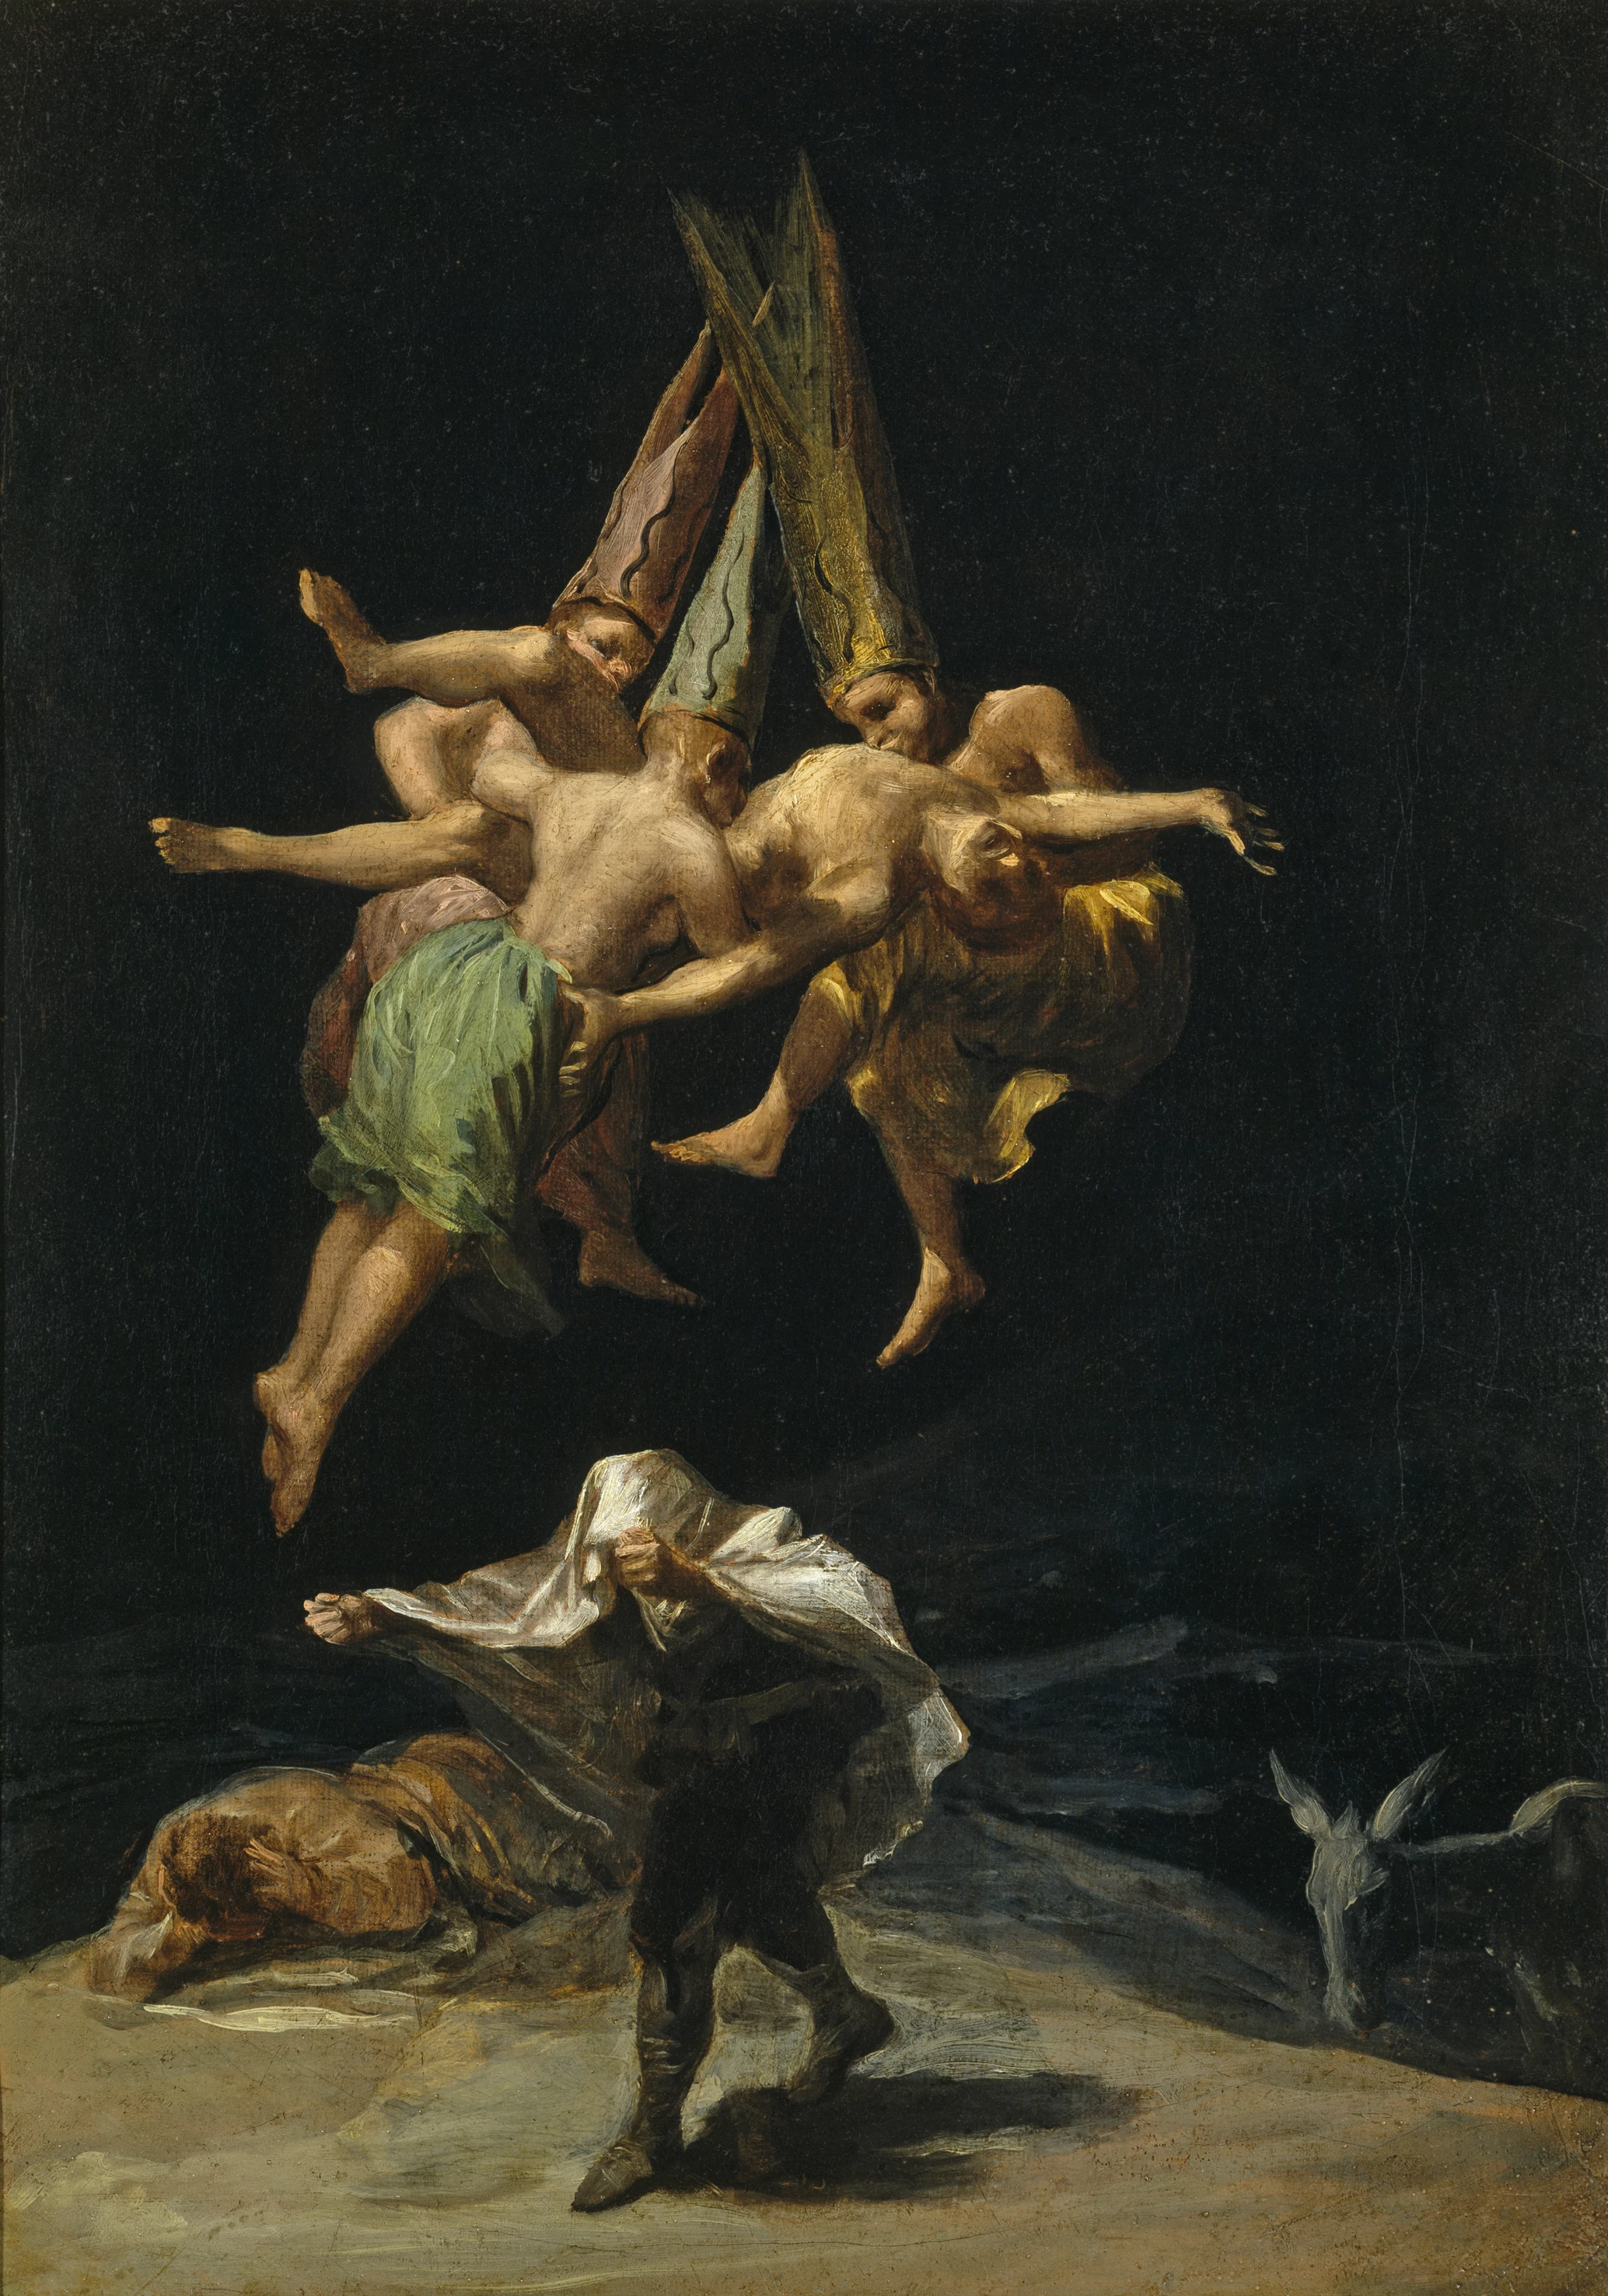 The Witches Flight, Francisco de Goya y Lucientes